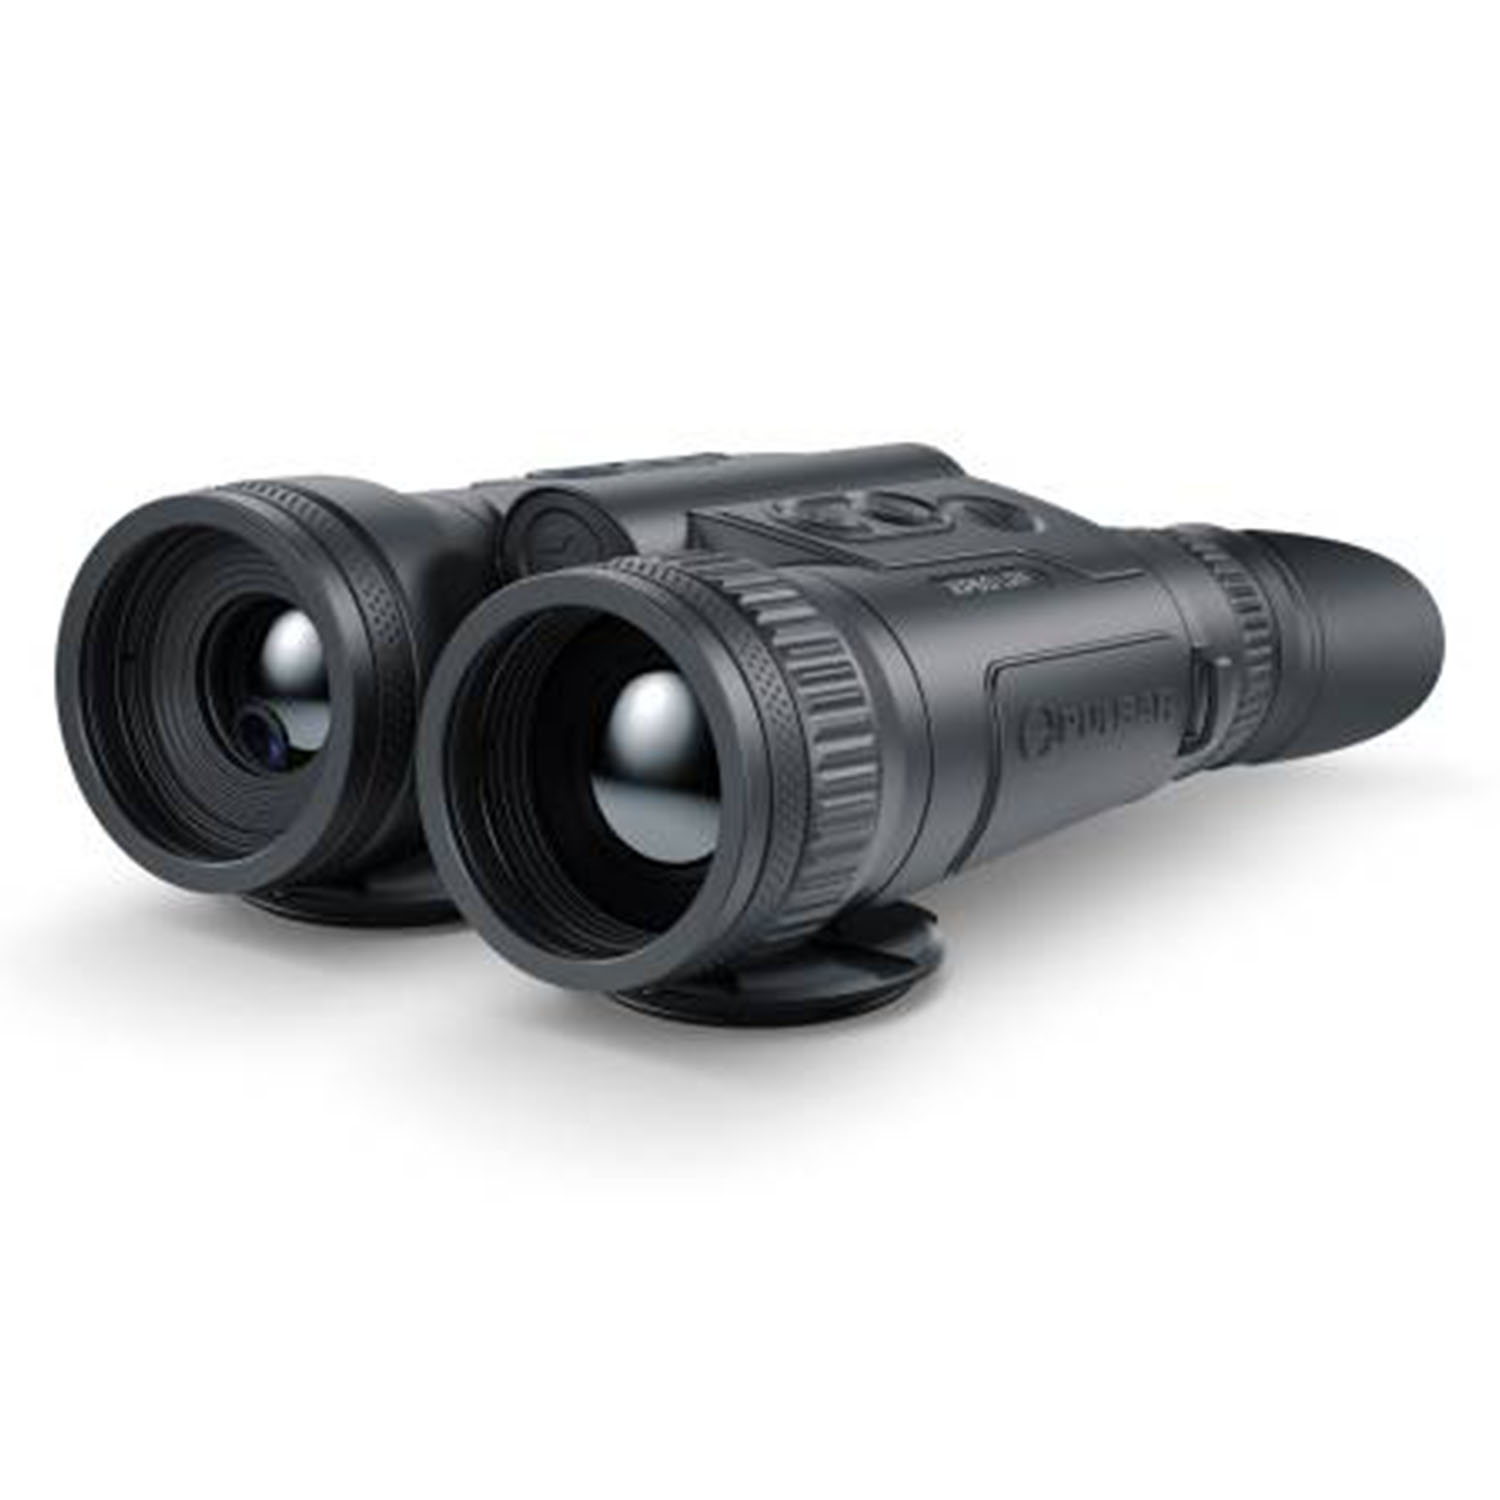 Thermal Imaging Binoculars Merger LRF XP50 - Wild Boar Hunting